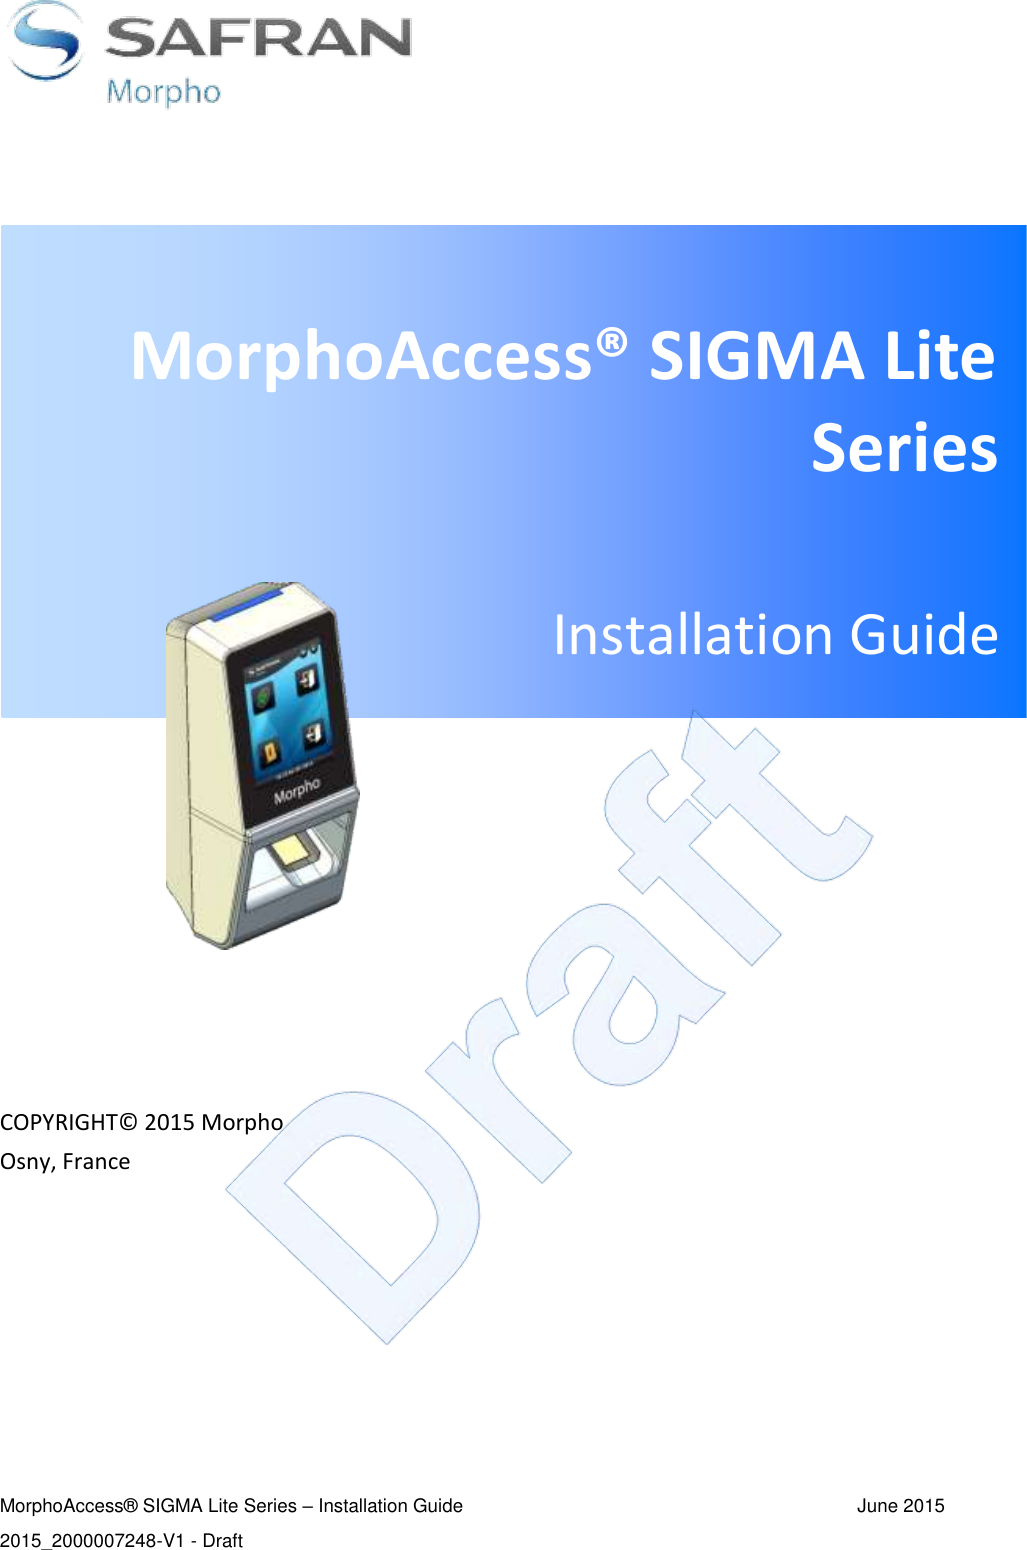      COPYRIGHT© 2015 Morpho Osny, France            MorphoAccess® SIGMA Lite Series – Installation Guide  June 2015   2015_2000007248-V1 - Draft  MorphoAccess® SIGMA Lite Series  Installation Guide 